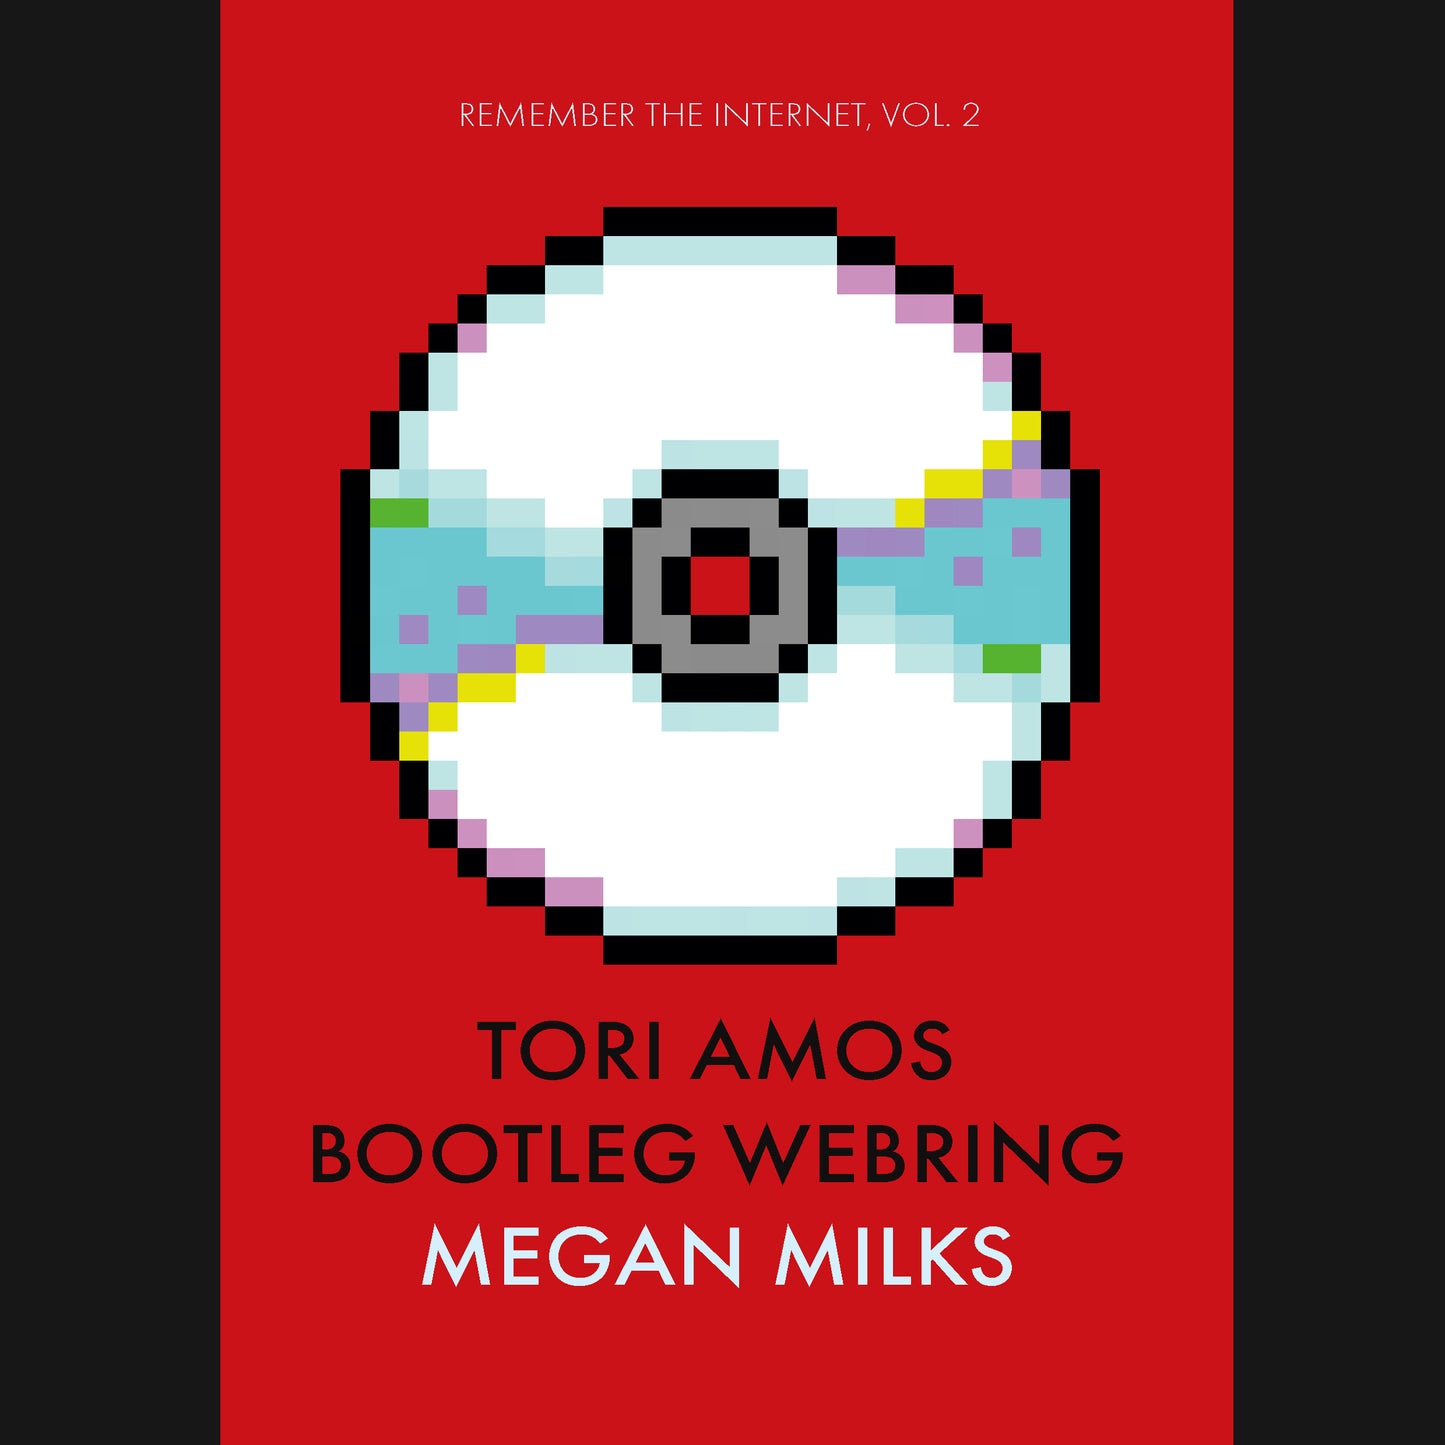 MEGAN MILKS - "REMEMBER THE INTERNET #2: TORI AMOS BOOTLEG WEBRING" BOOK